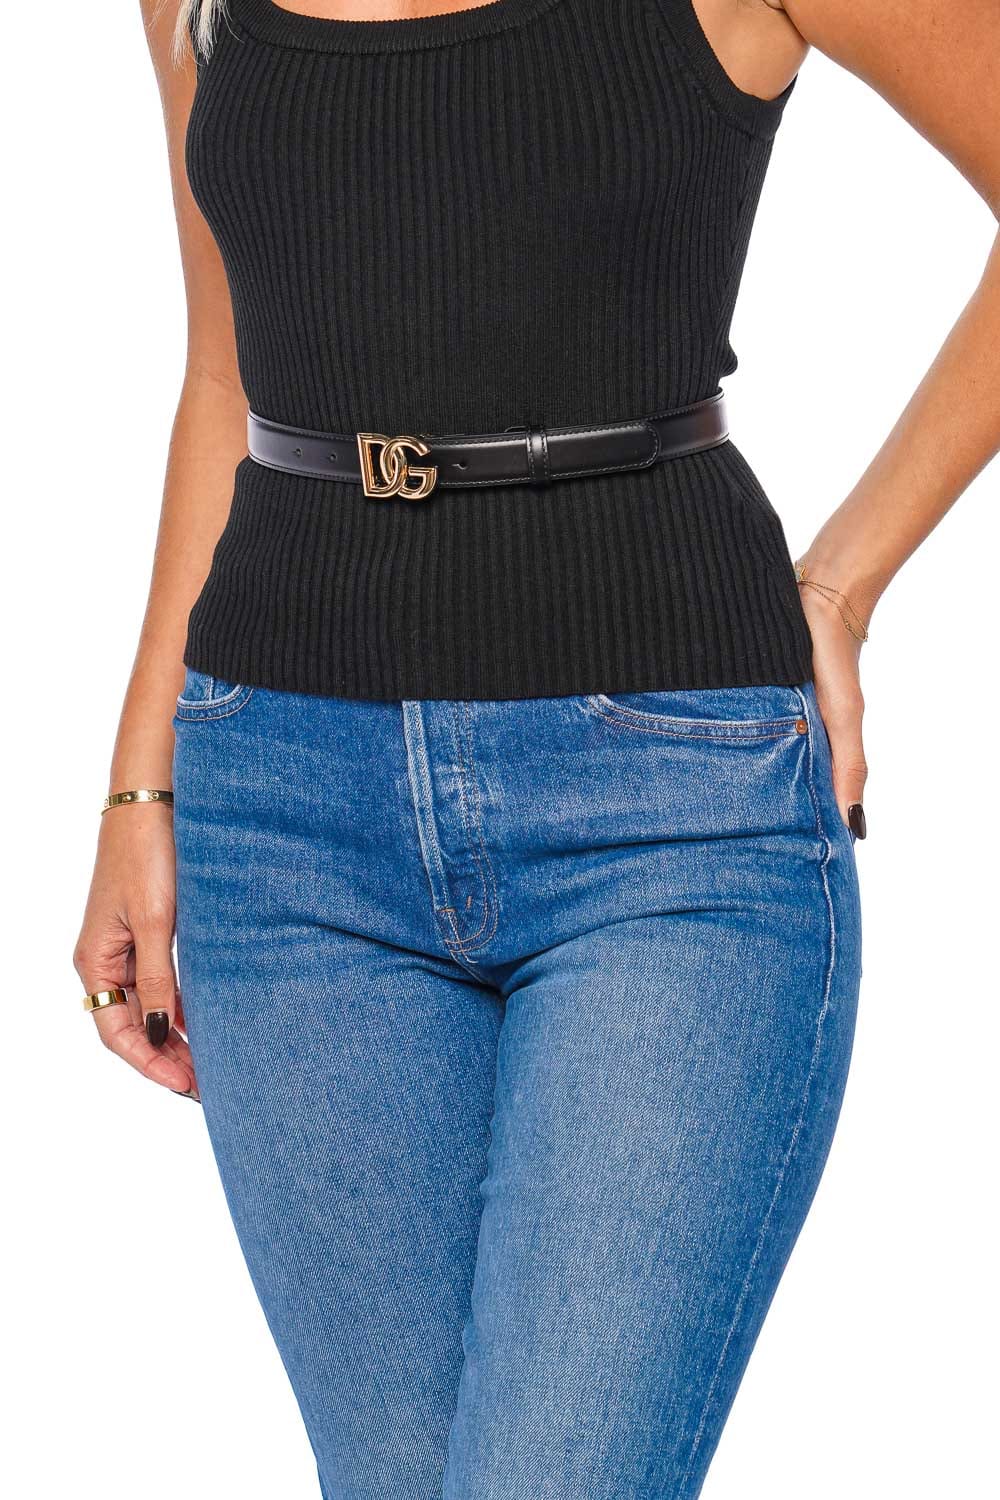 Dolce & Gabbana DG Logo Black Leather Belt